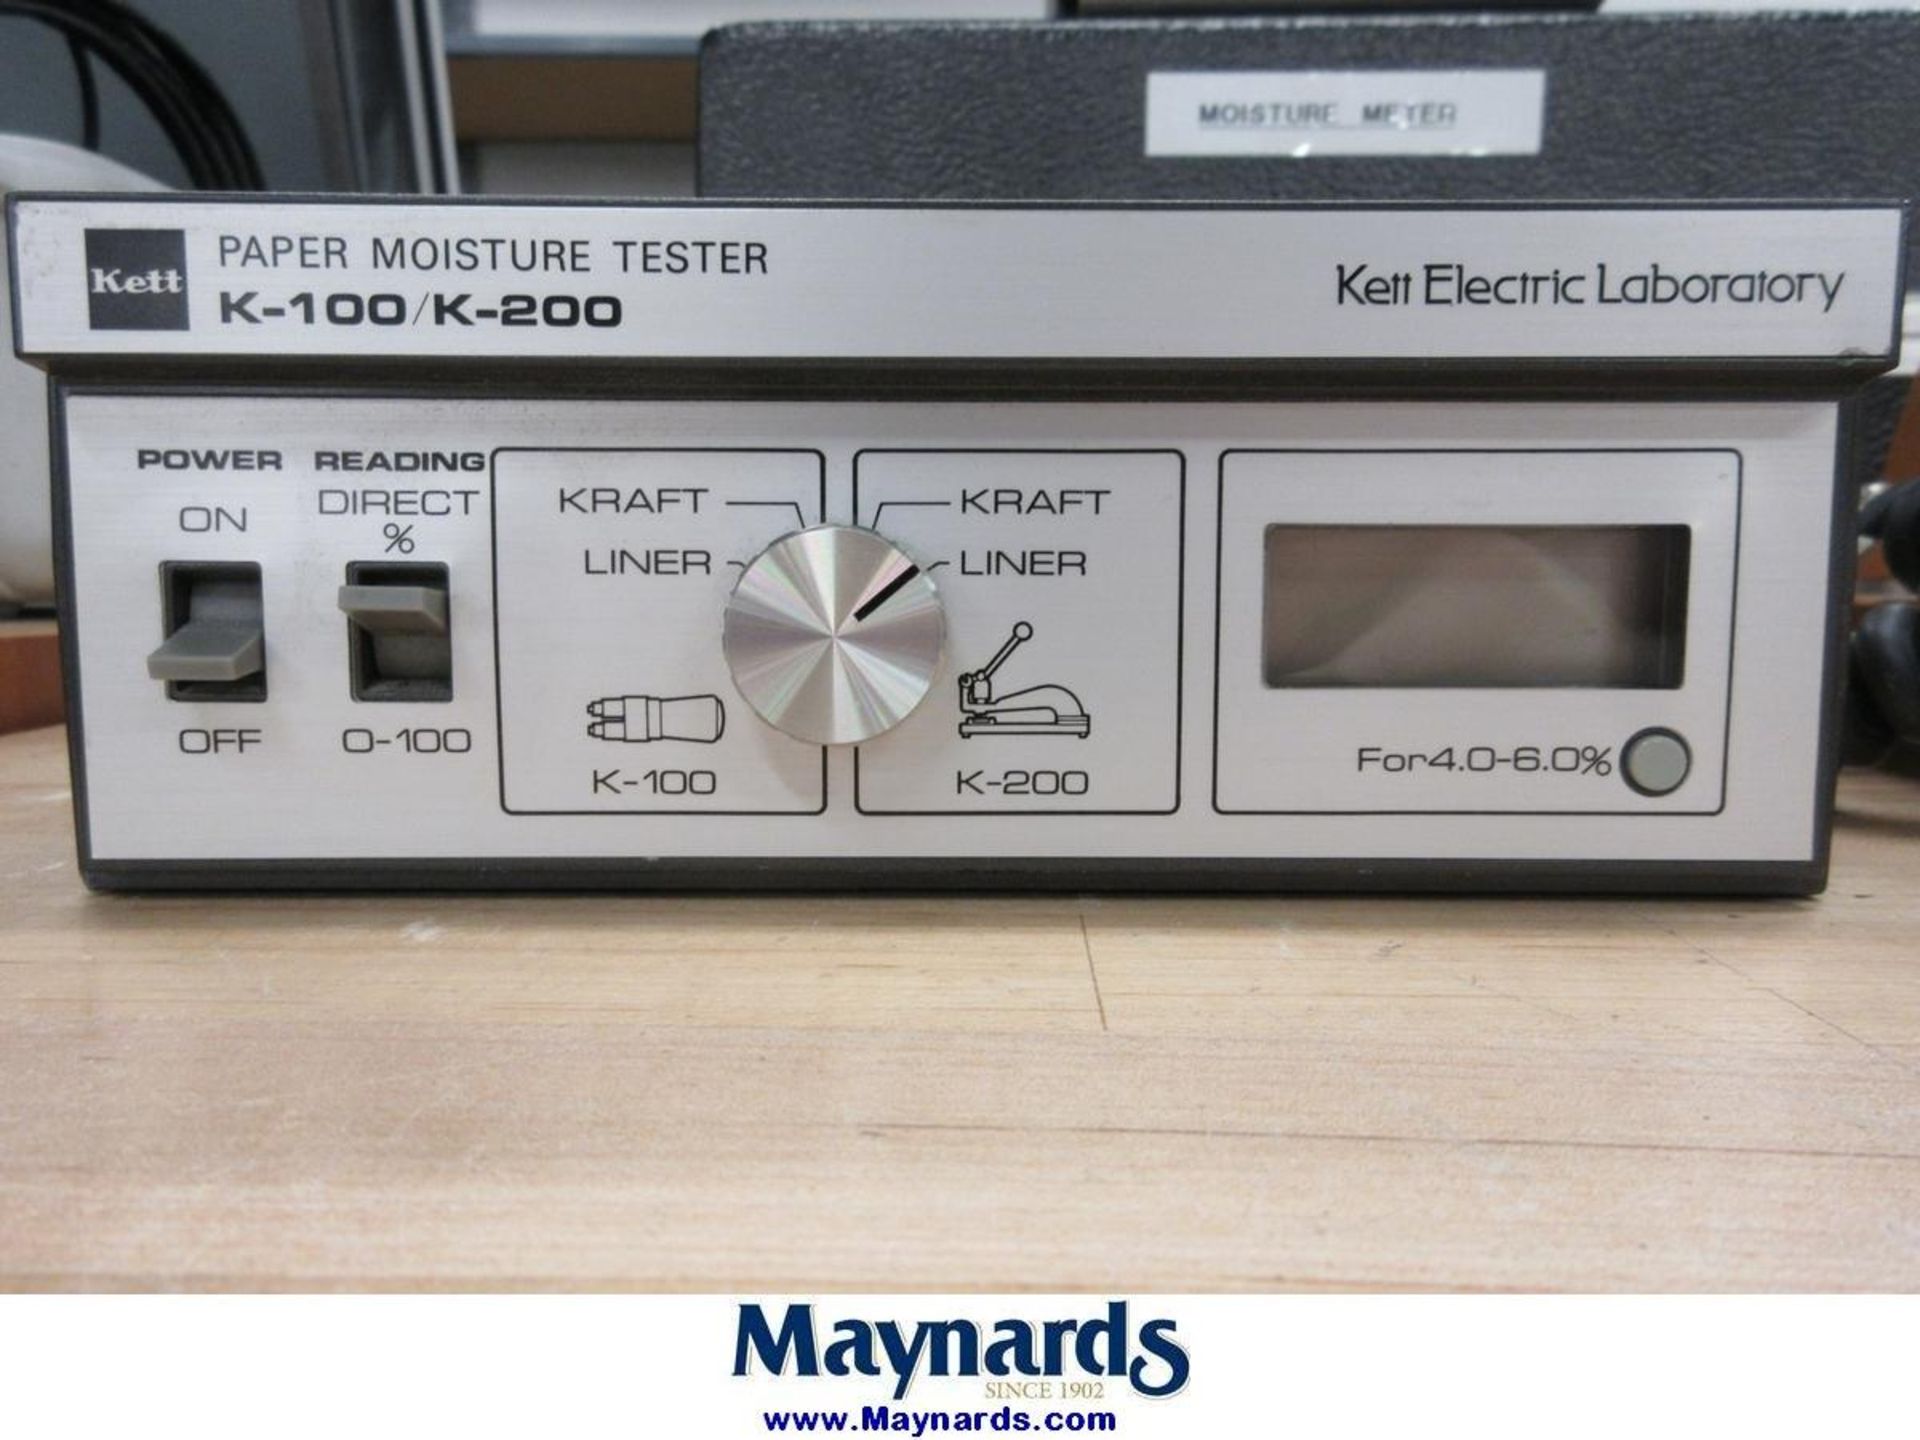 Kett Electric Laboratory K-200 Paper Moisture Tester - Image 4 of 5